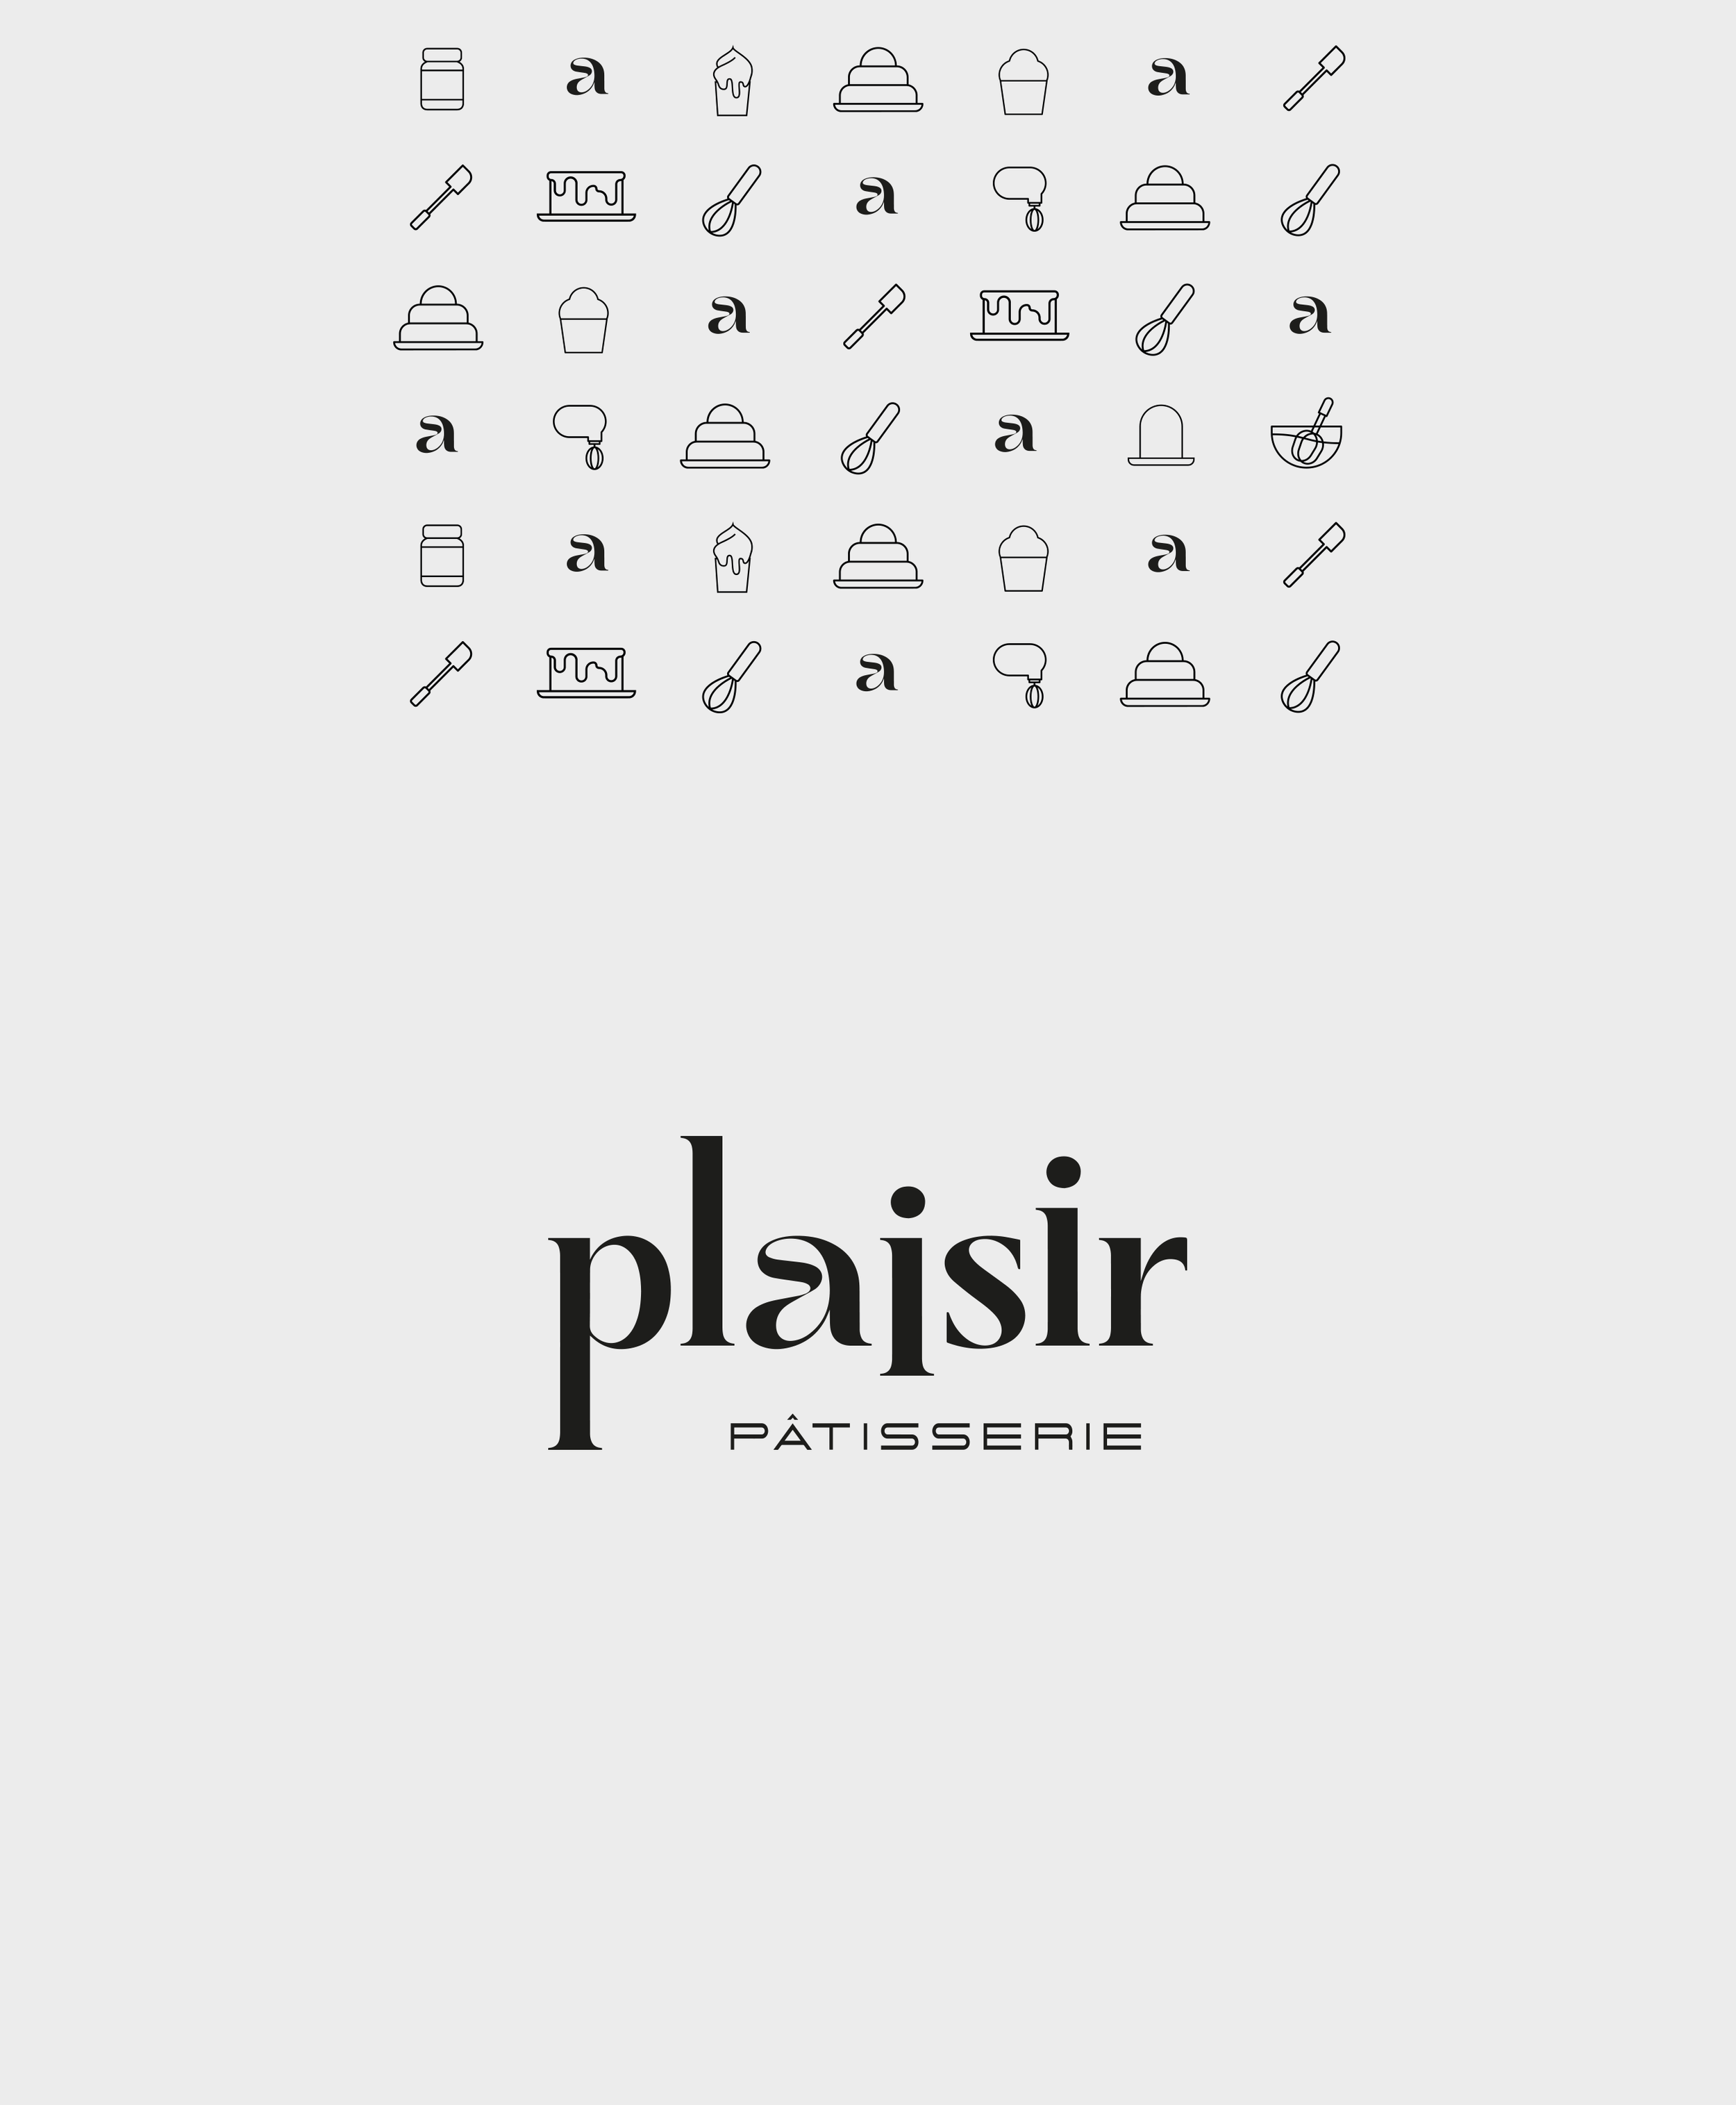 daniel-zito-PLAISIR-identidade-visual-logo-branding-01.png